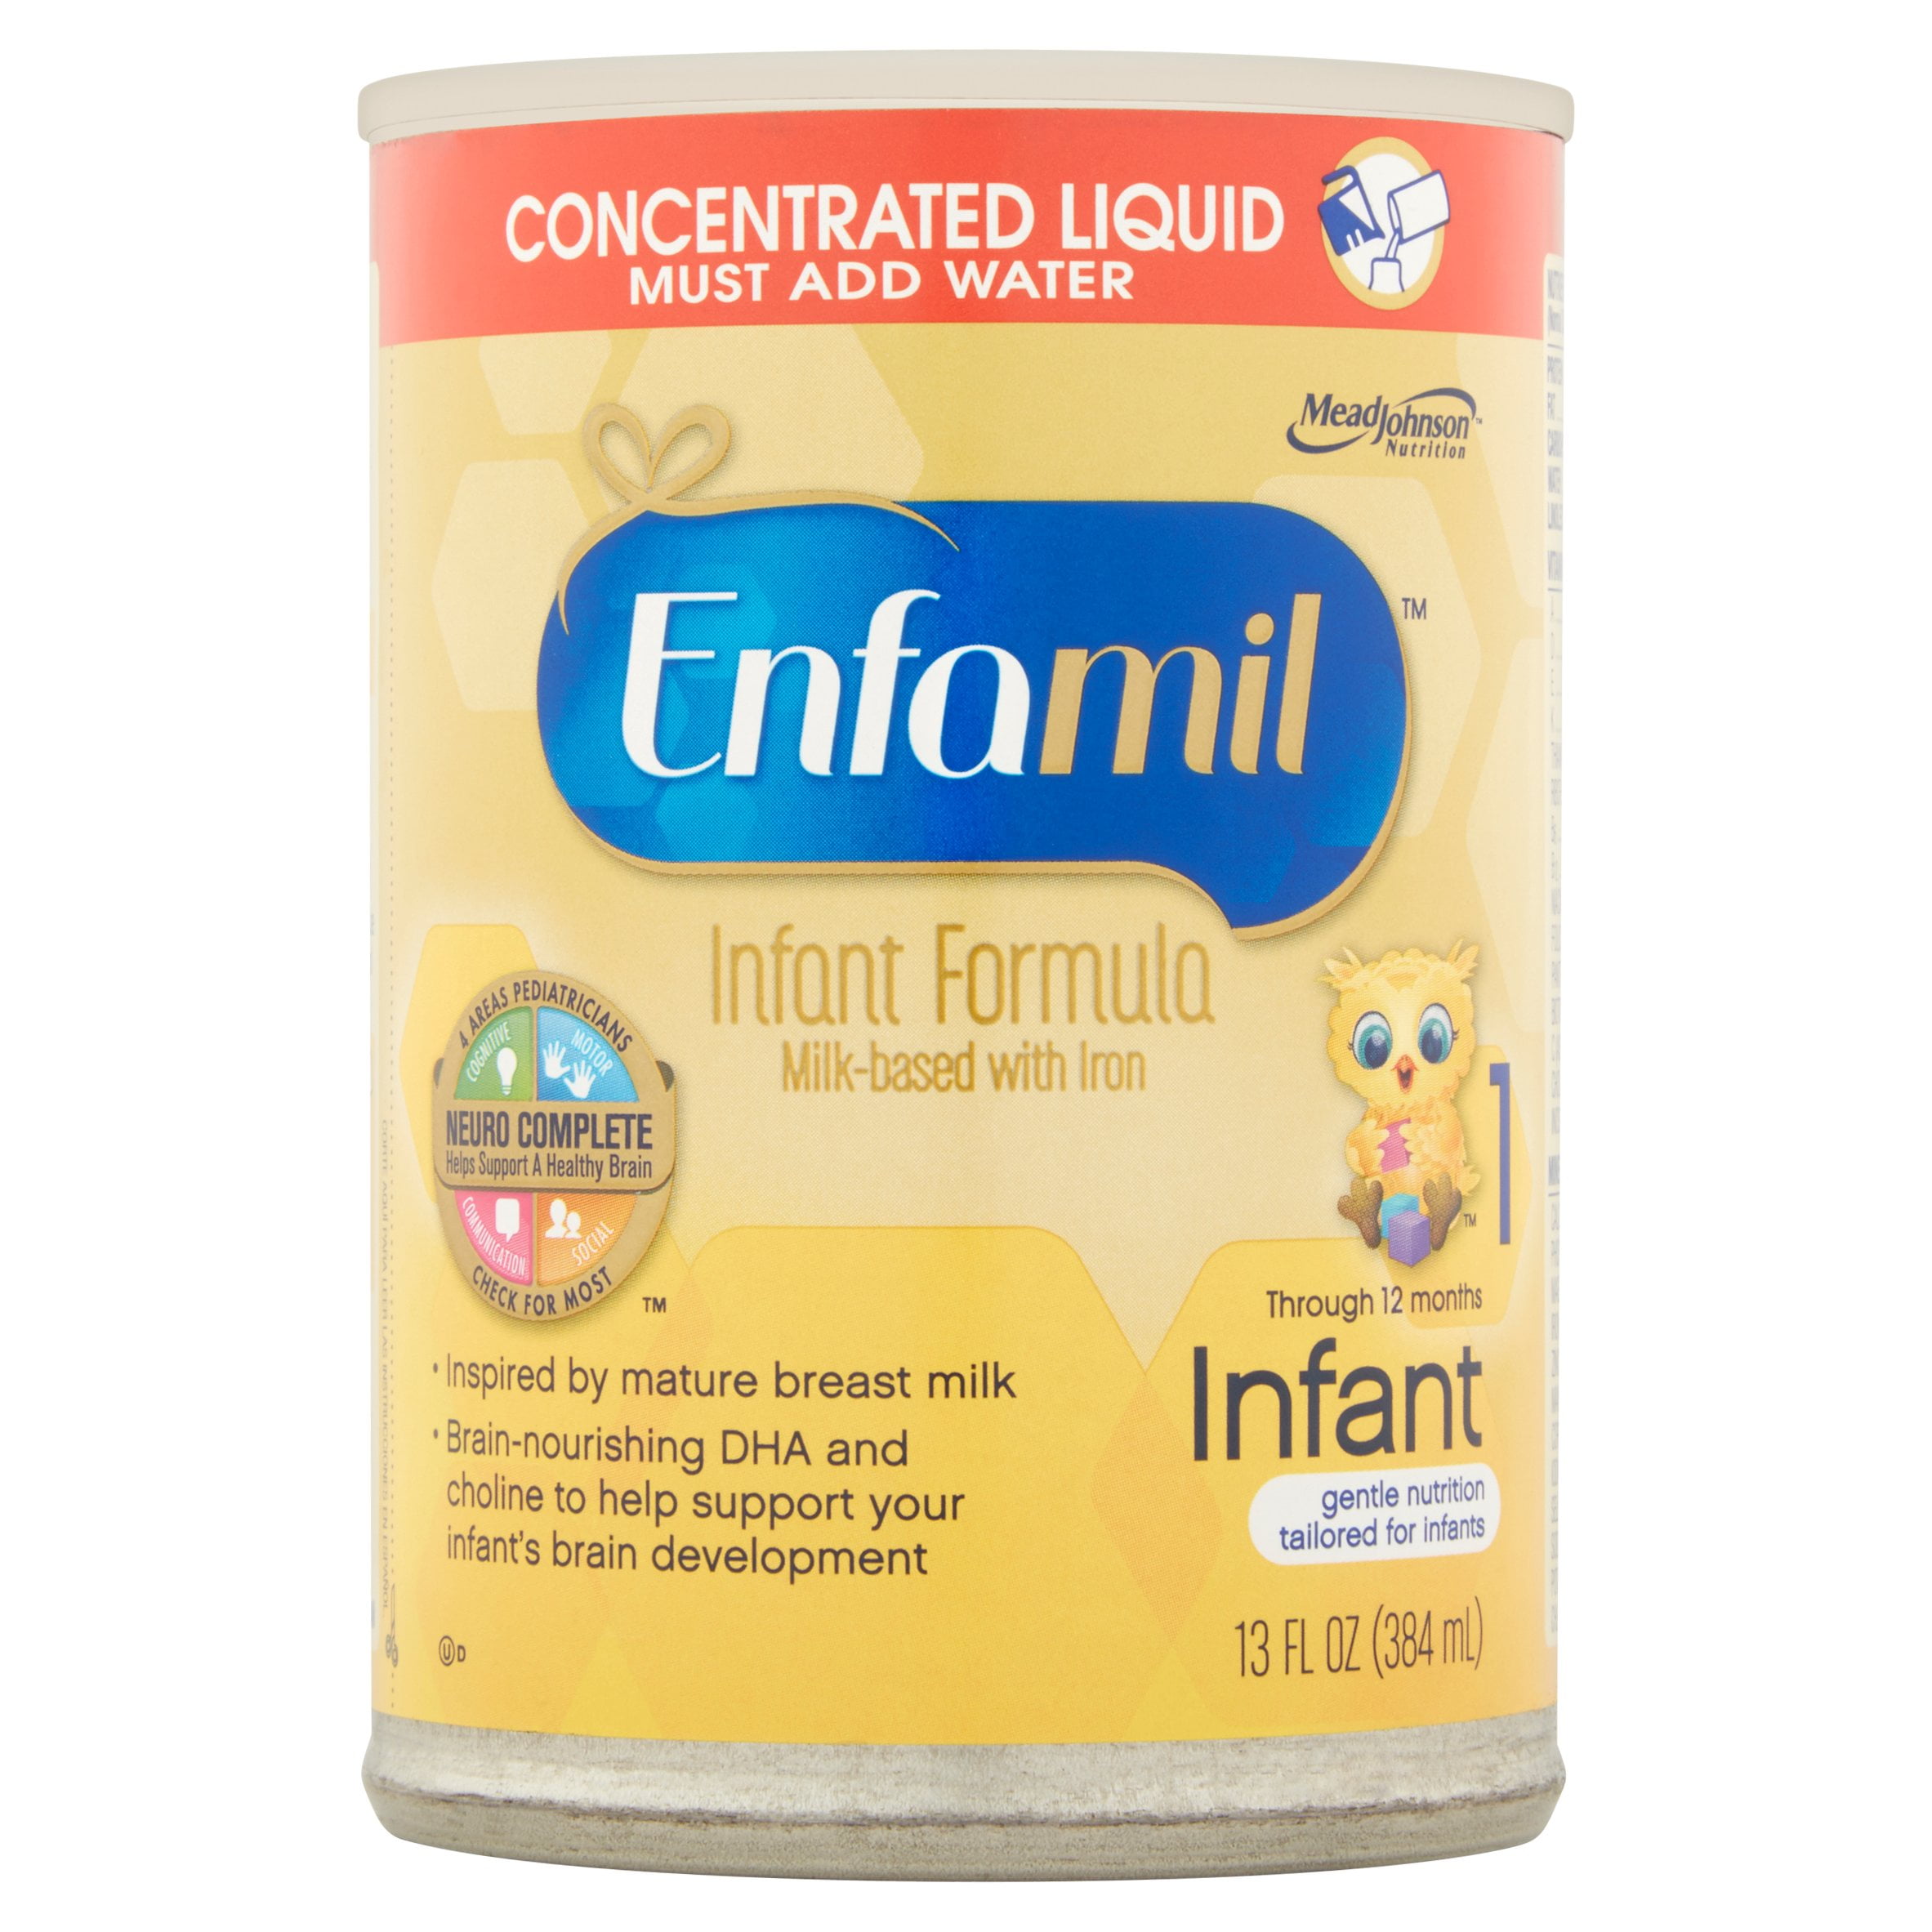 enfamil concentrated liquid infant formula